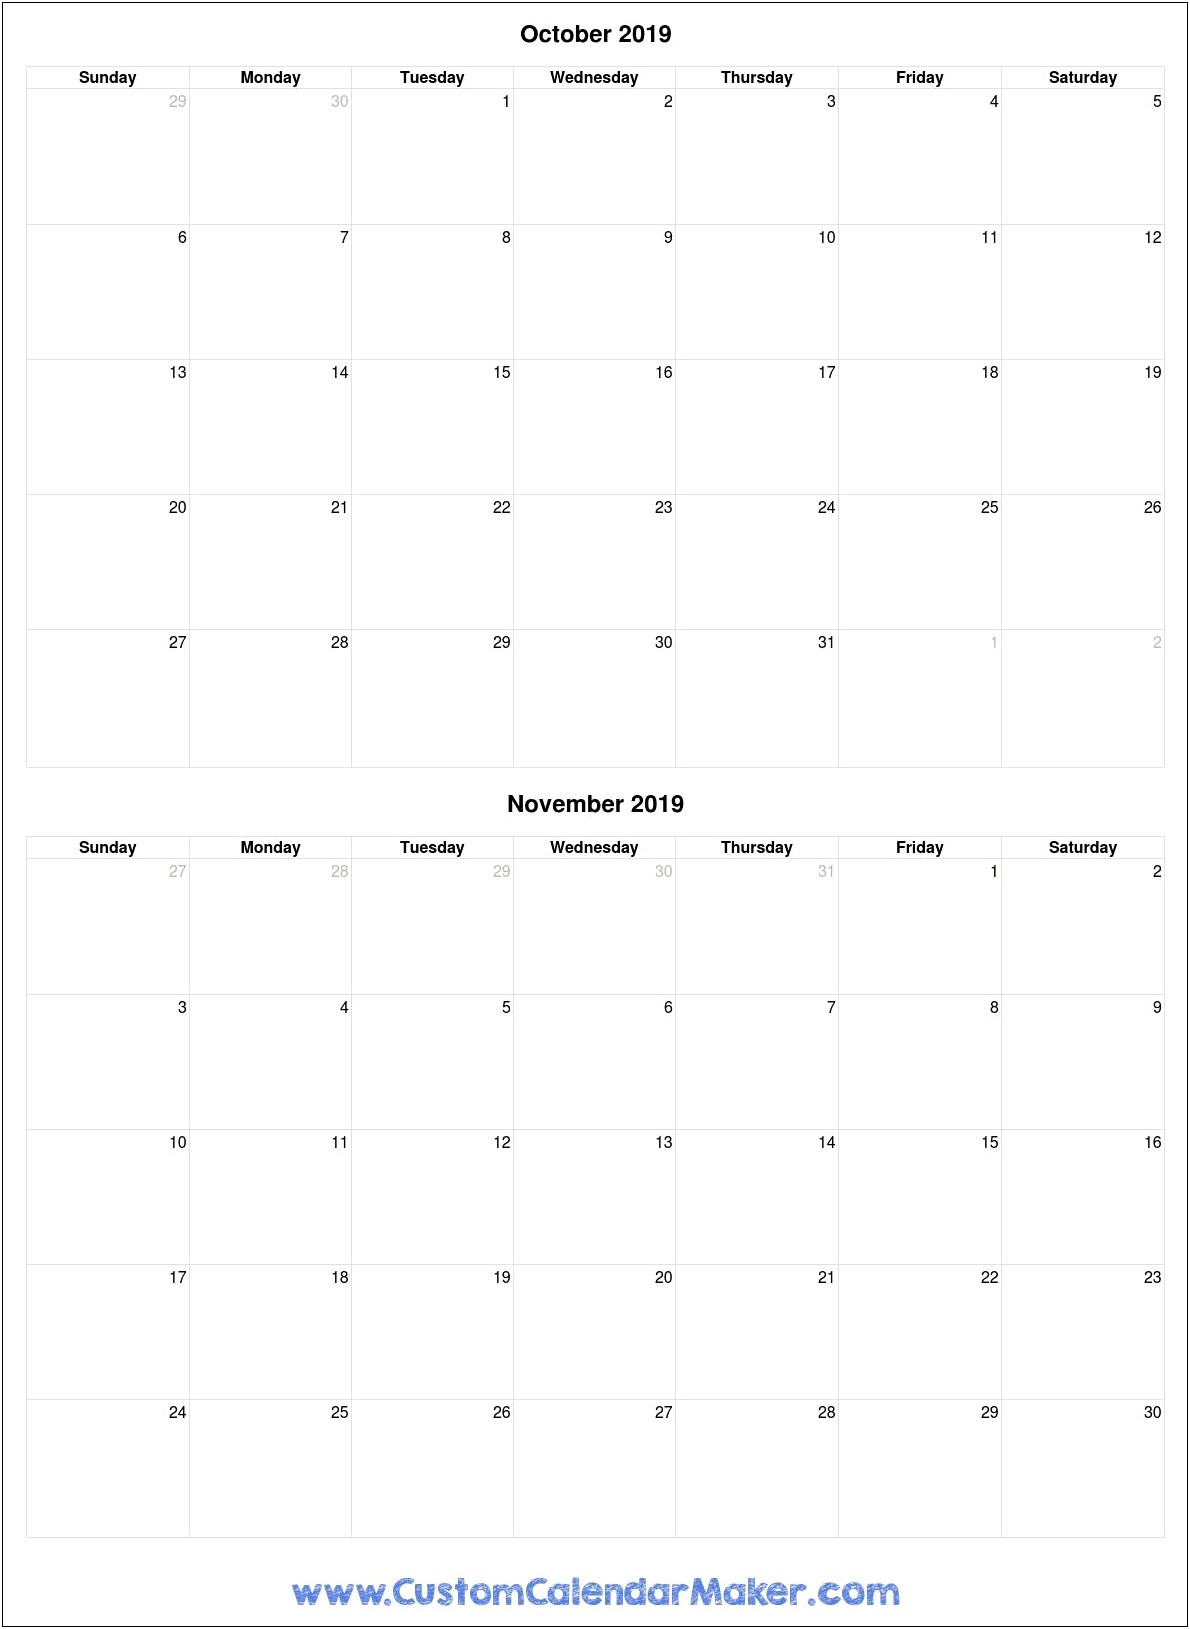 Free Blank Calendar Template October 2019